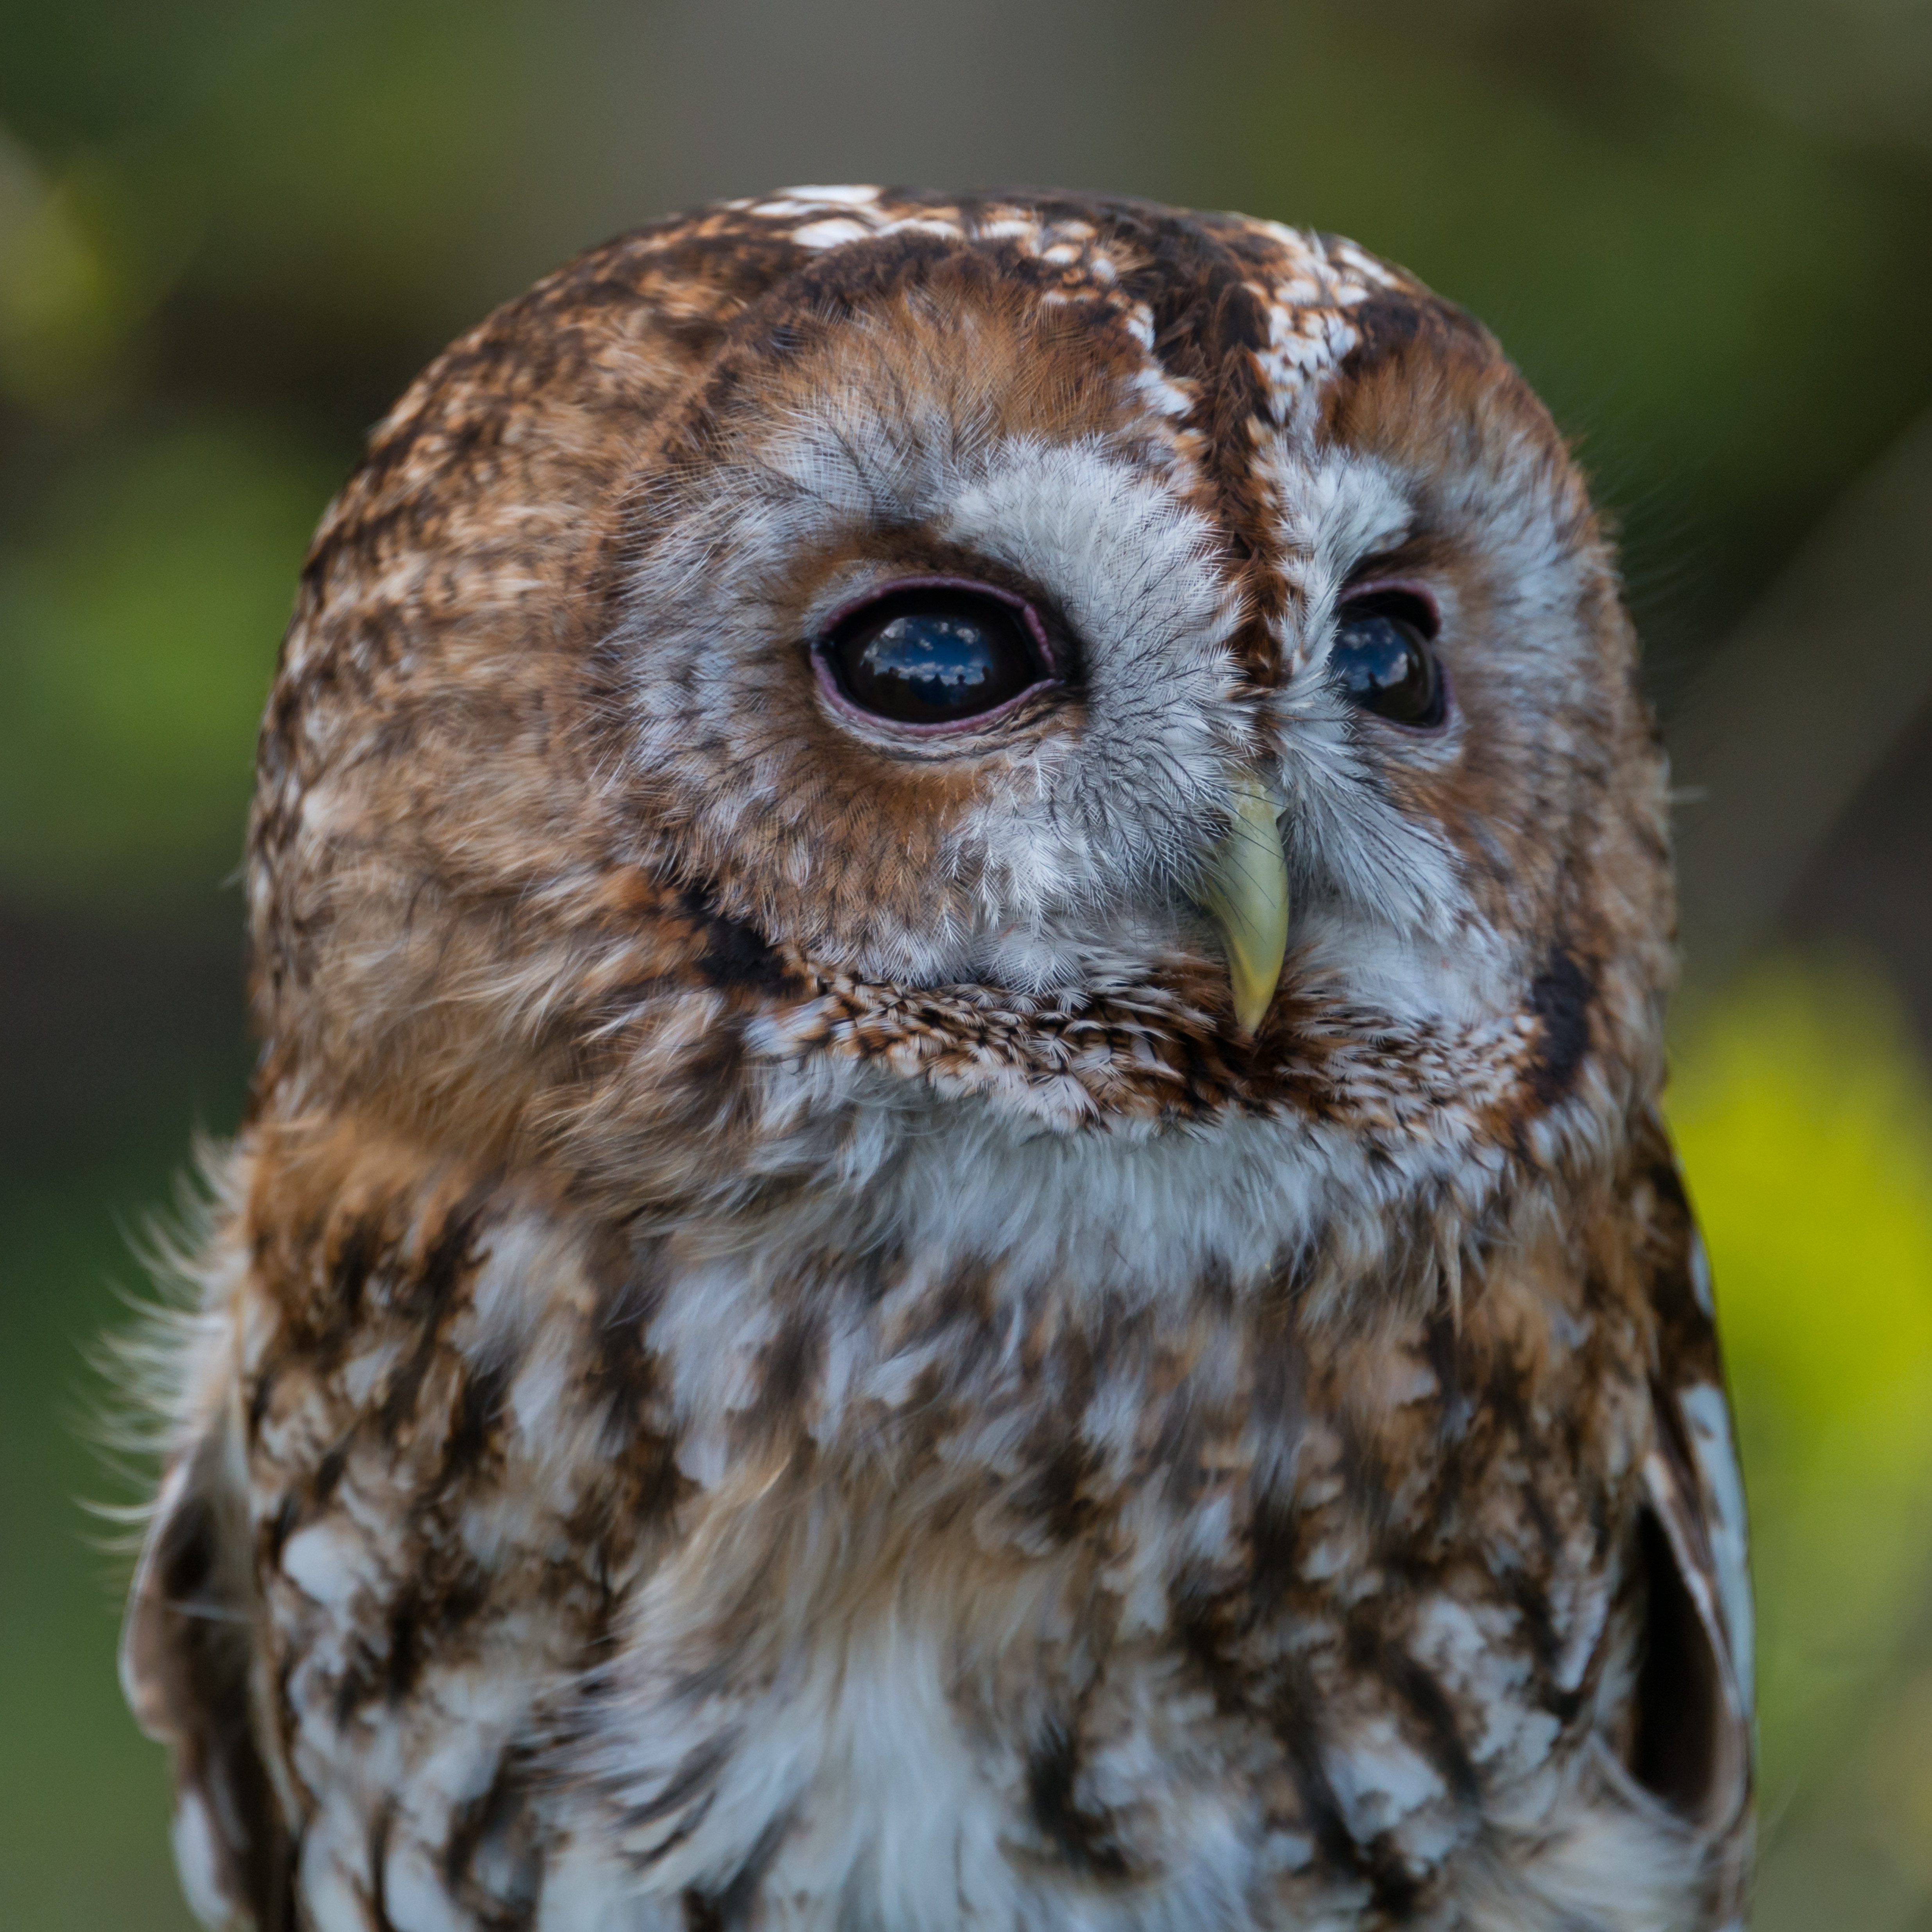 Tawny owl image (c) fotogenix www.fotosearch.co.uk